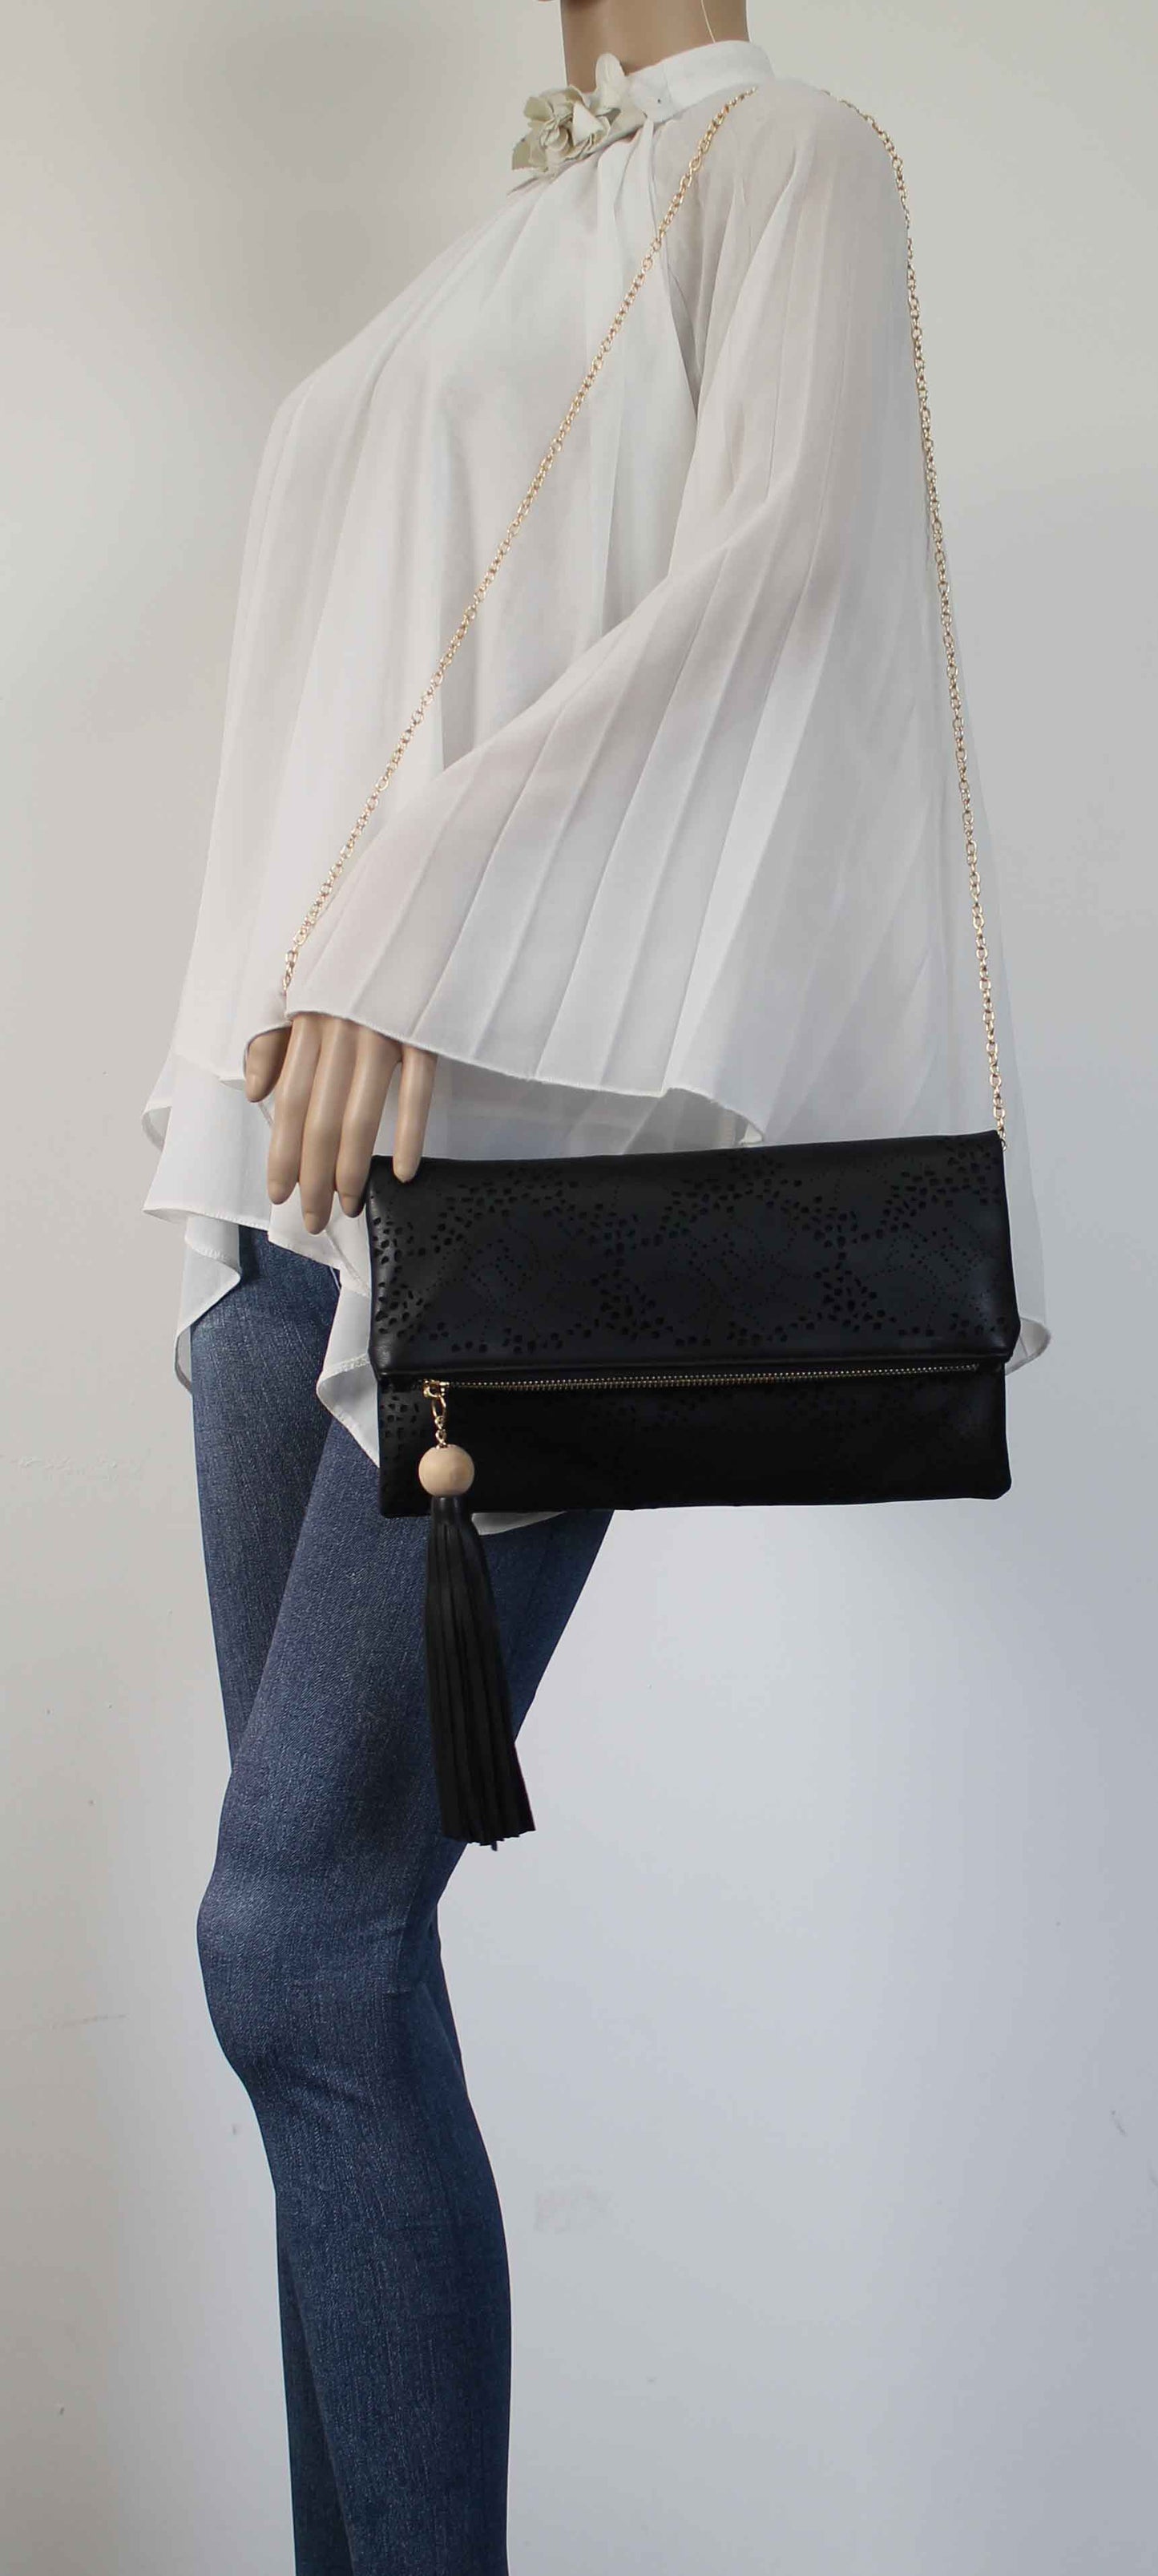 SWANKYSWANS Lena Clutch Bag Black Cute Cheap Clutch Bag For Weddings School and Work